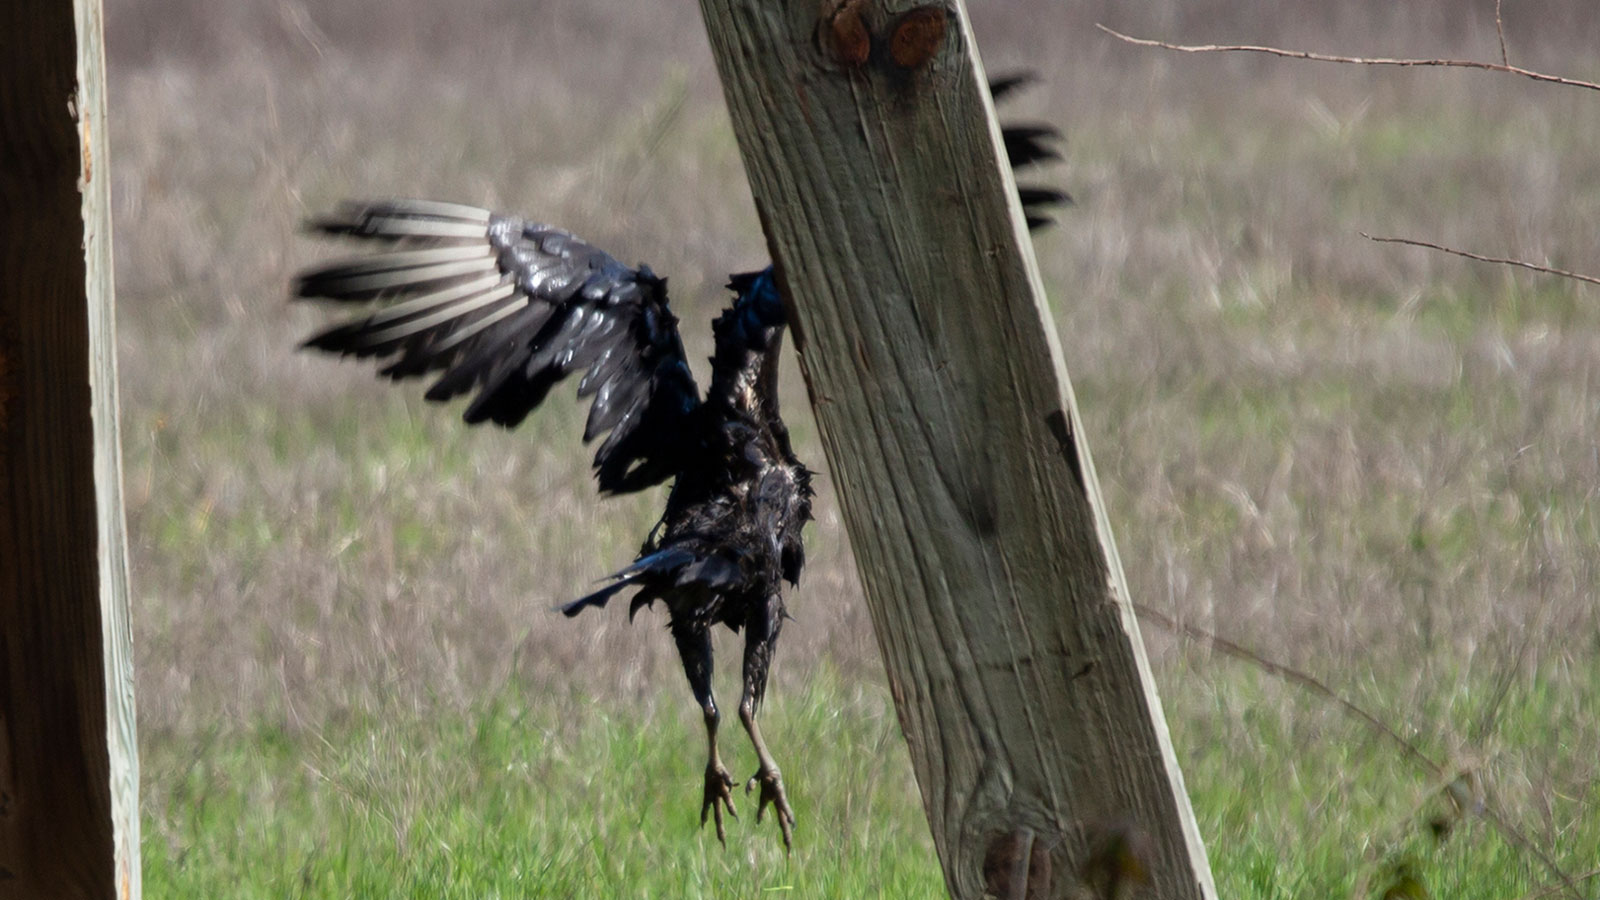 Black vulture taking off near a wooden plank